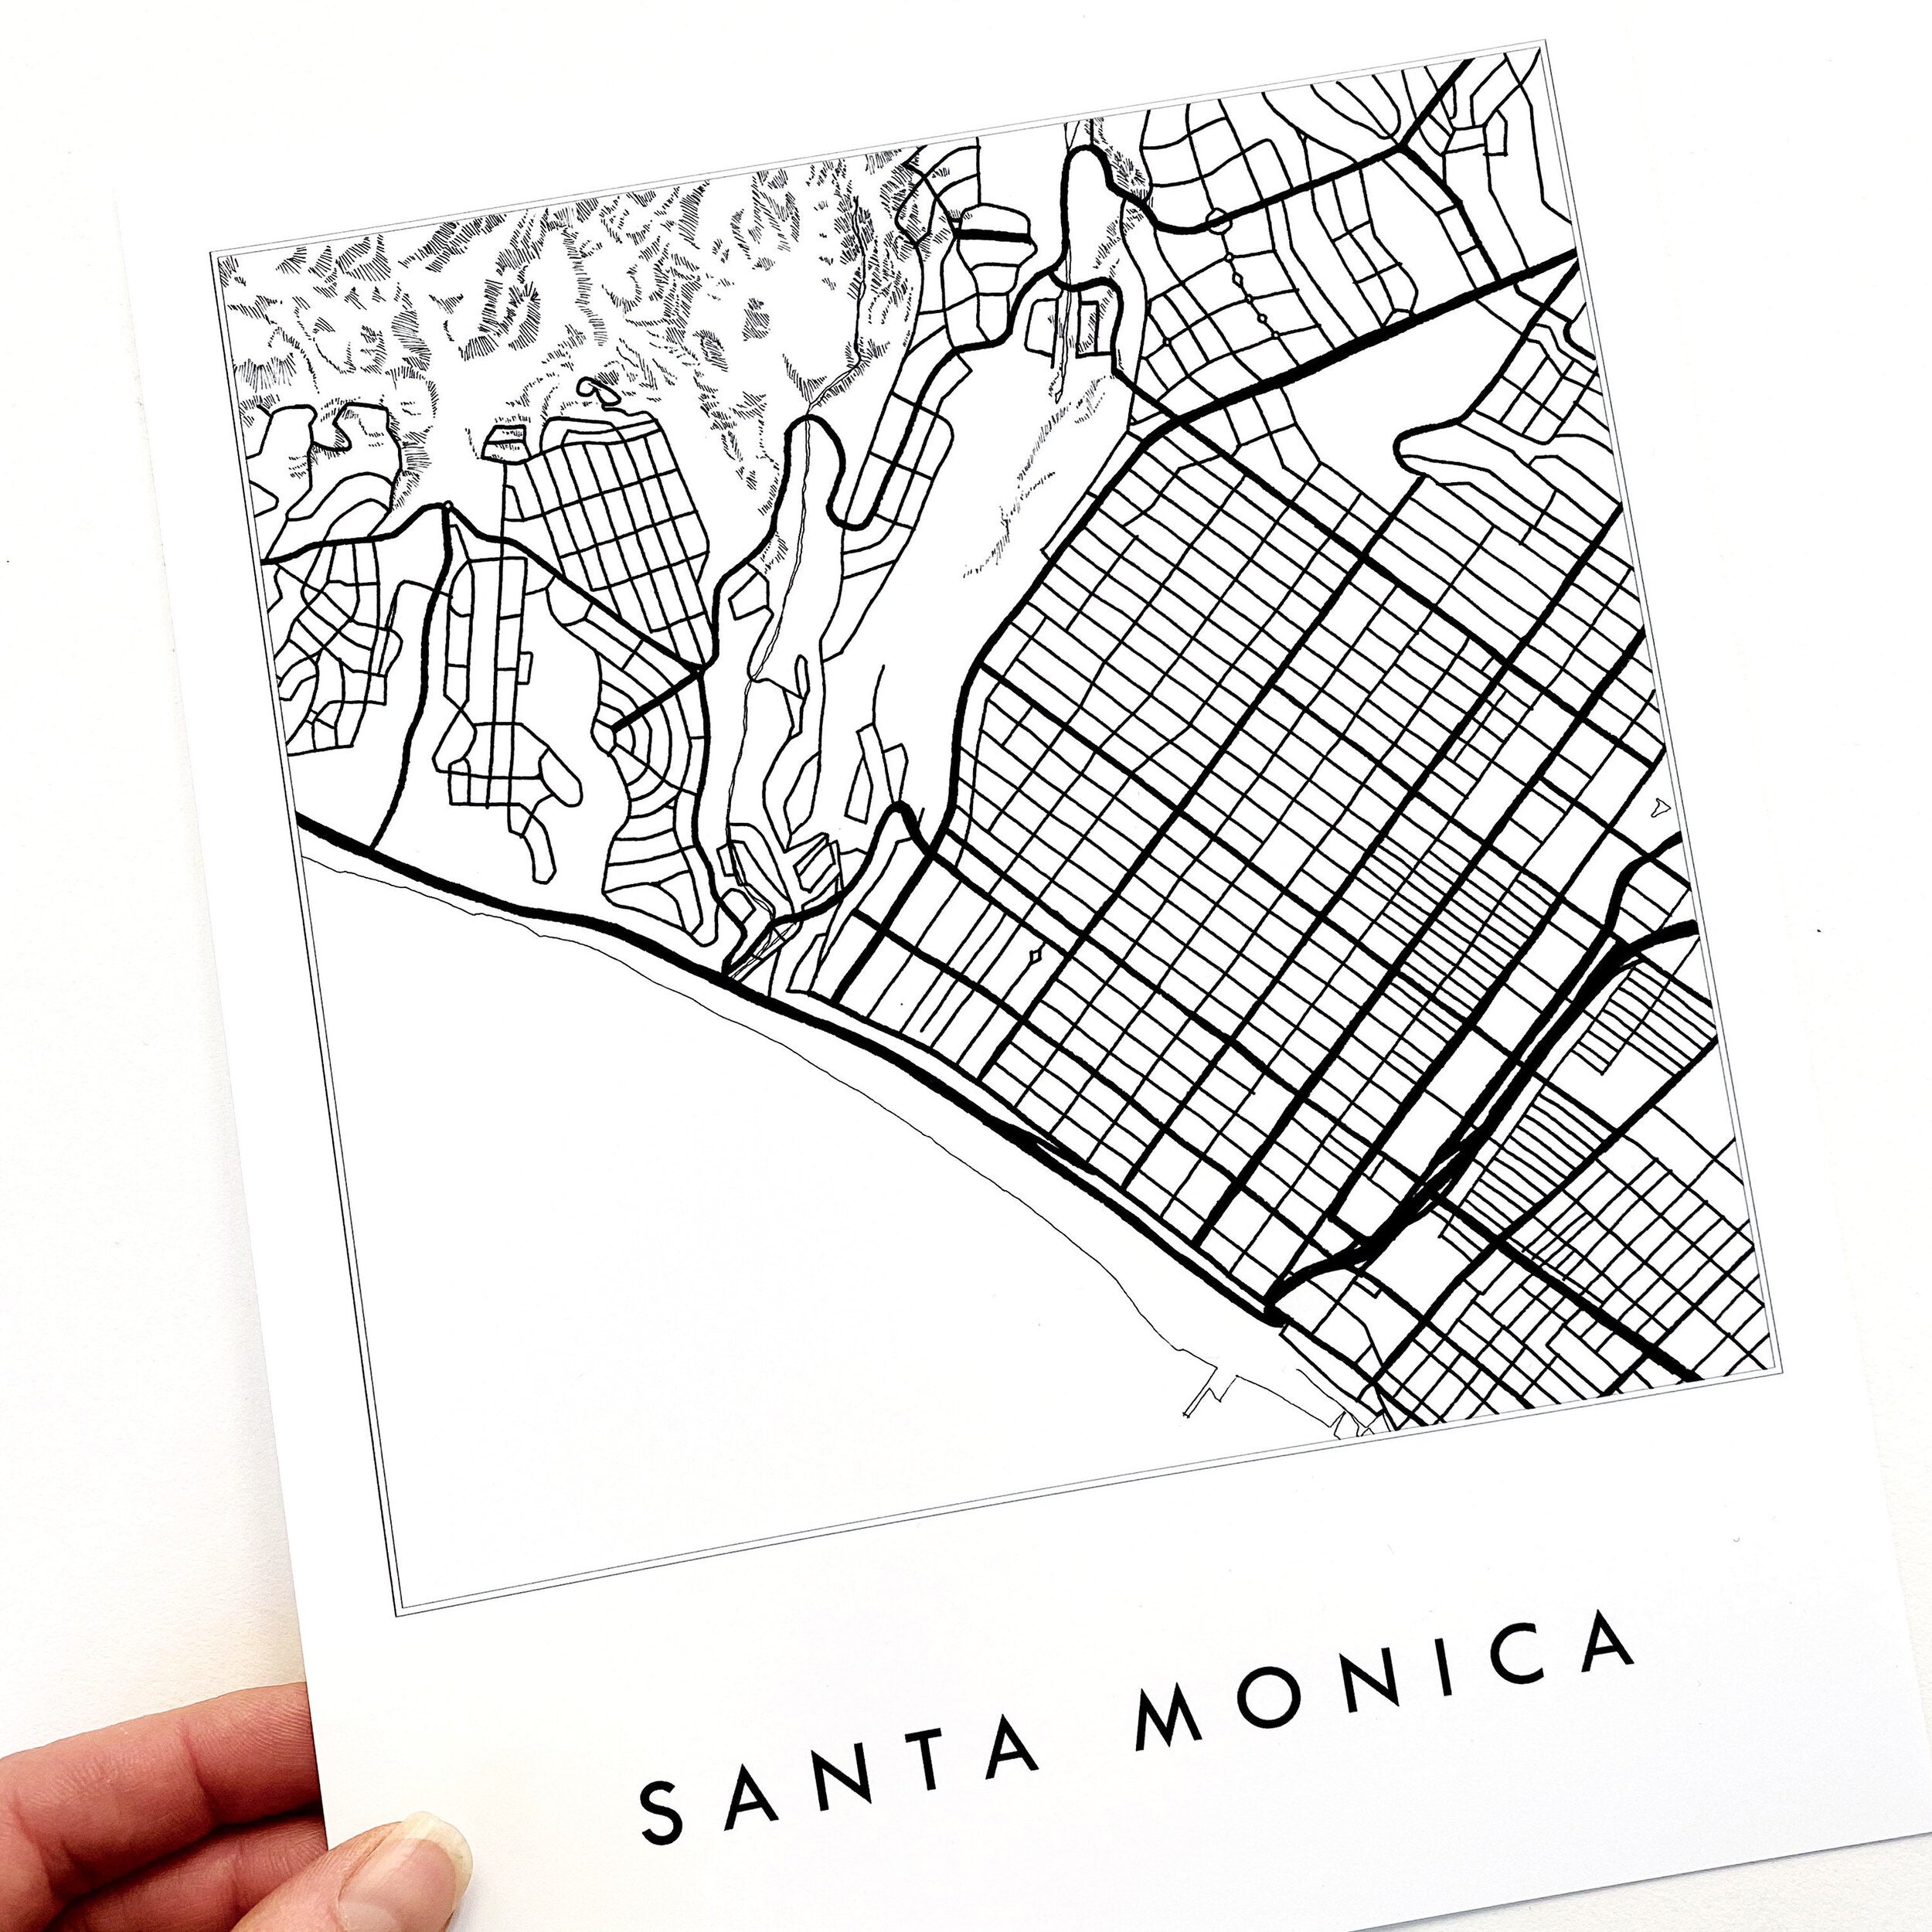 SANTA MONICA California City Lines Street Map: PRINT